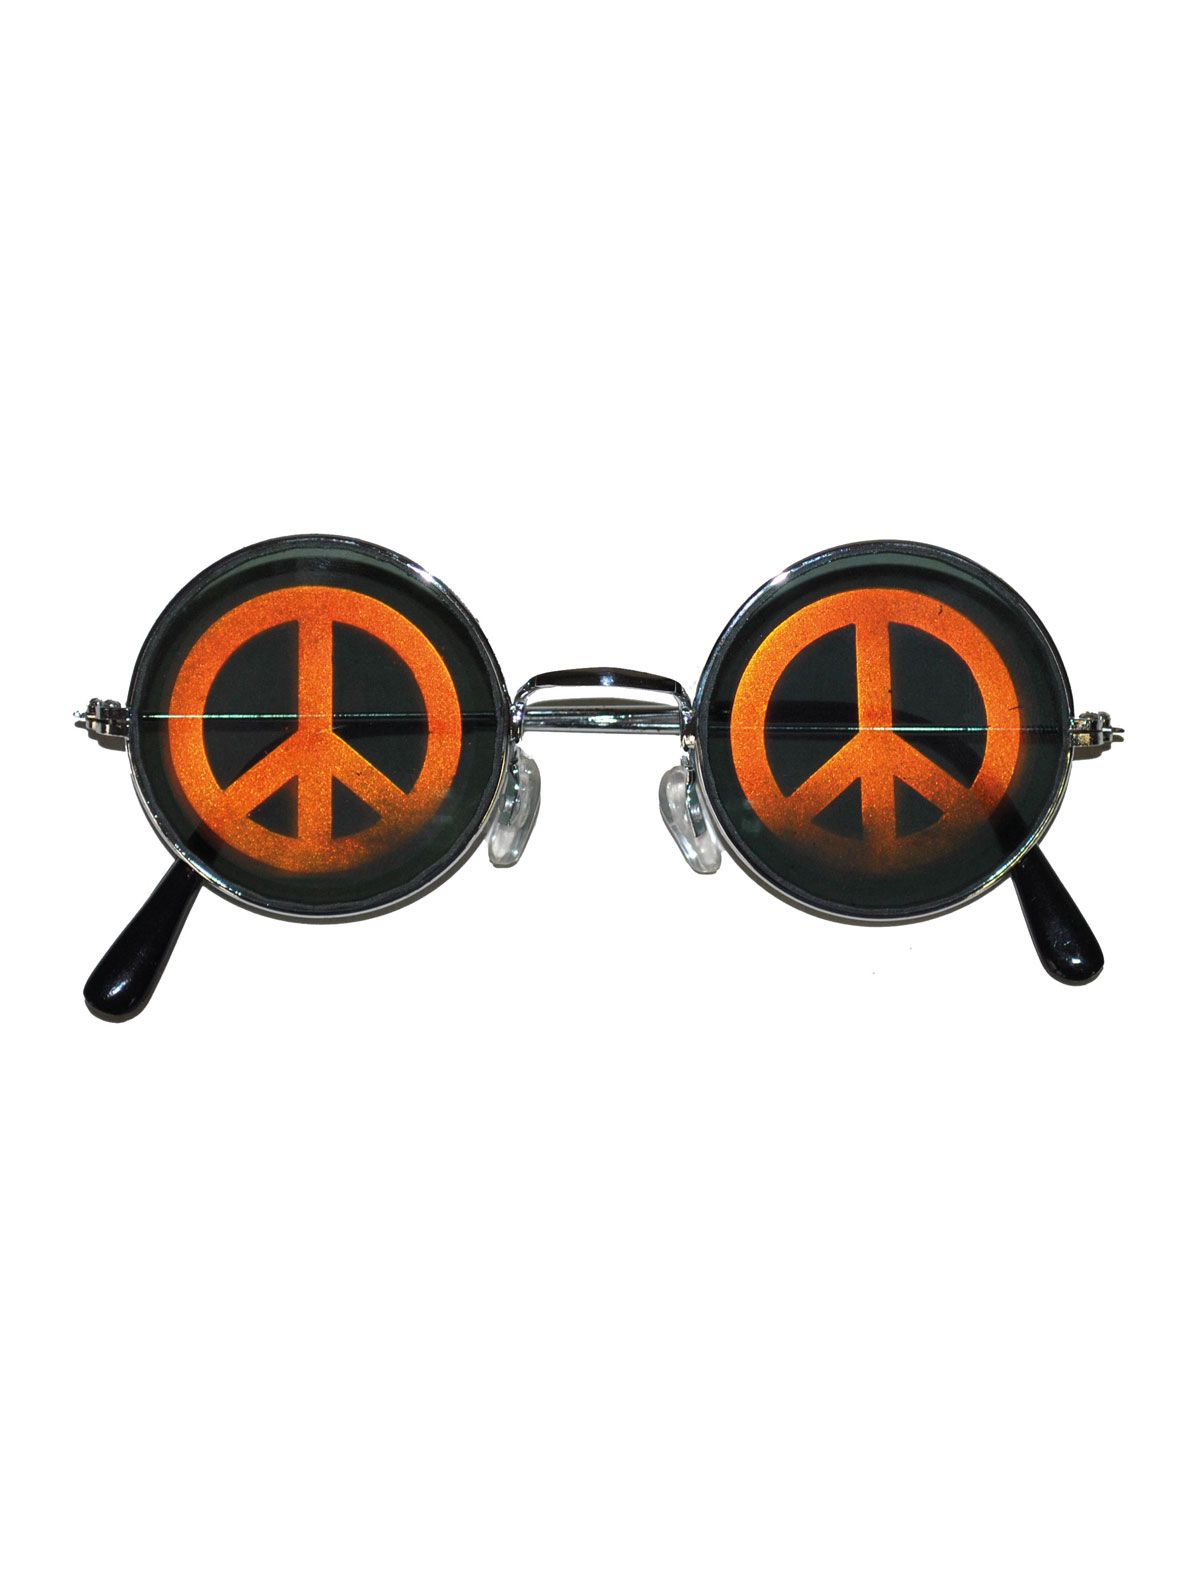 verkoop - attributen - Brillen - Hippie bril hologram peace